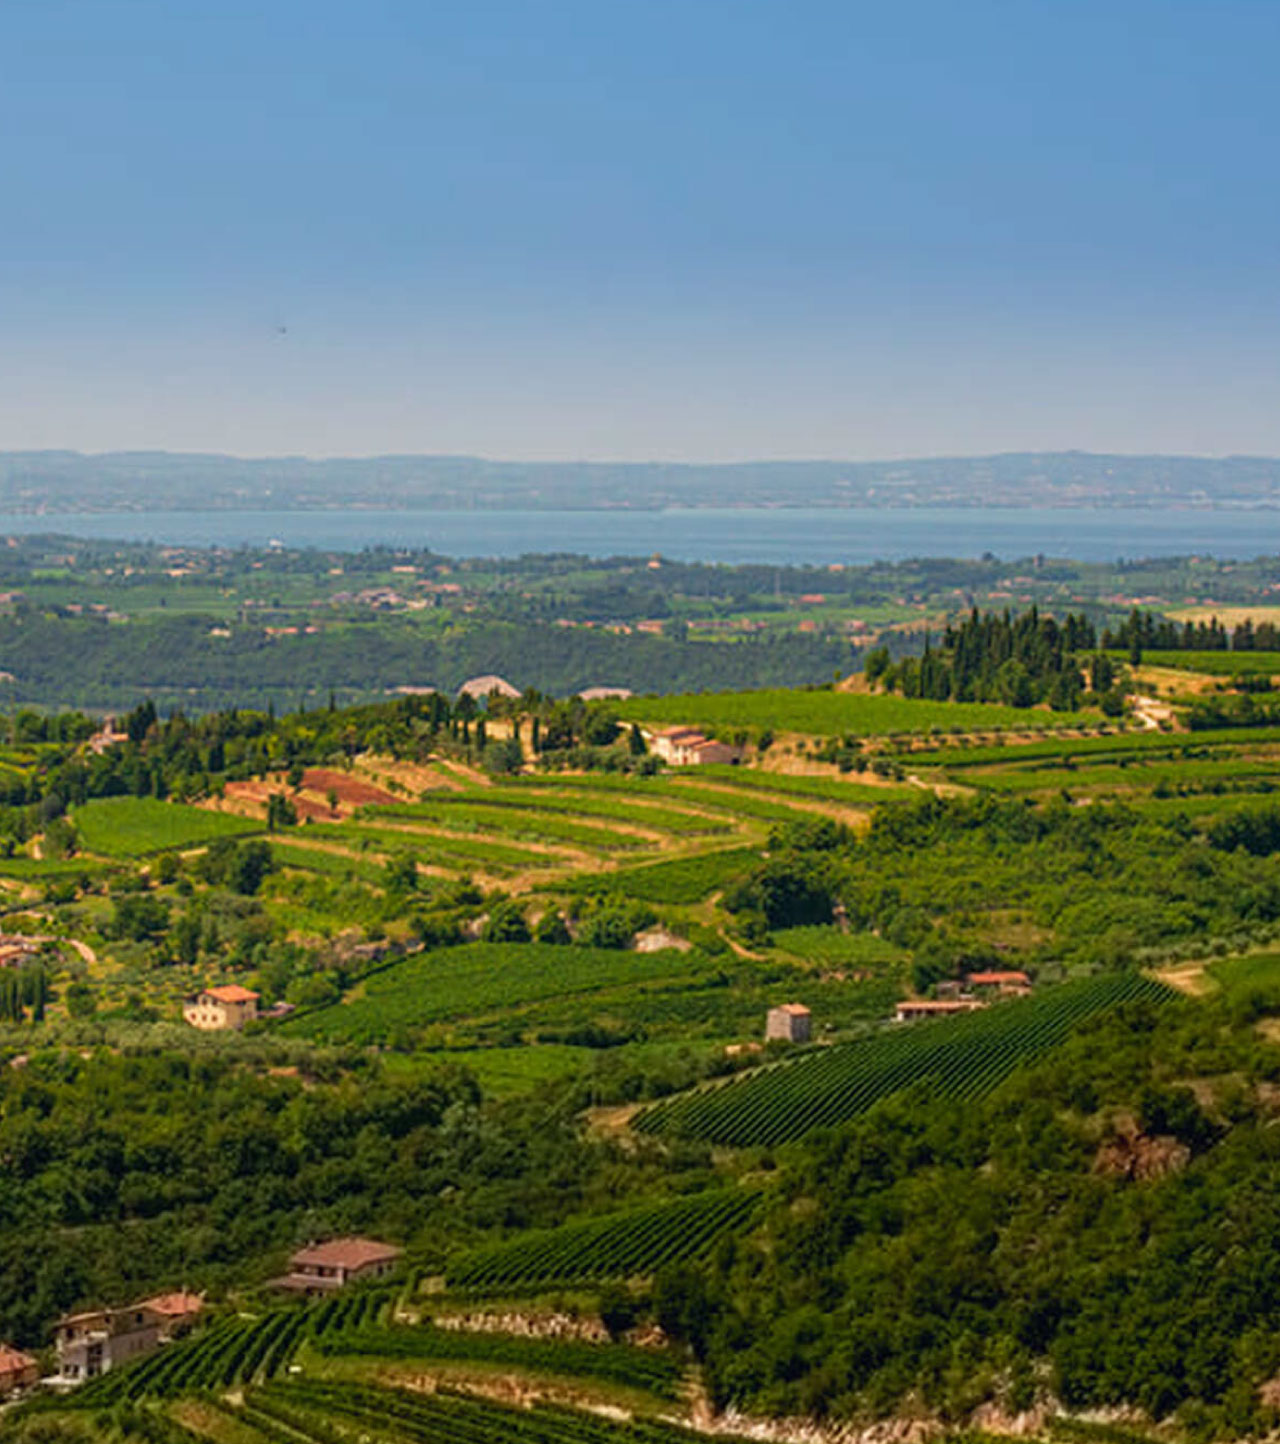 Ariel view of Allegrini vineyards.